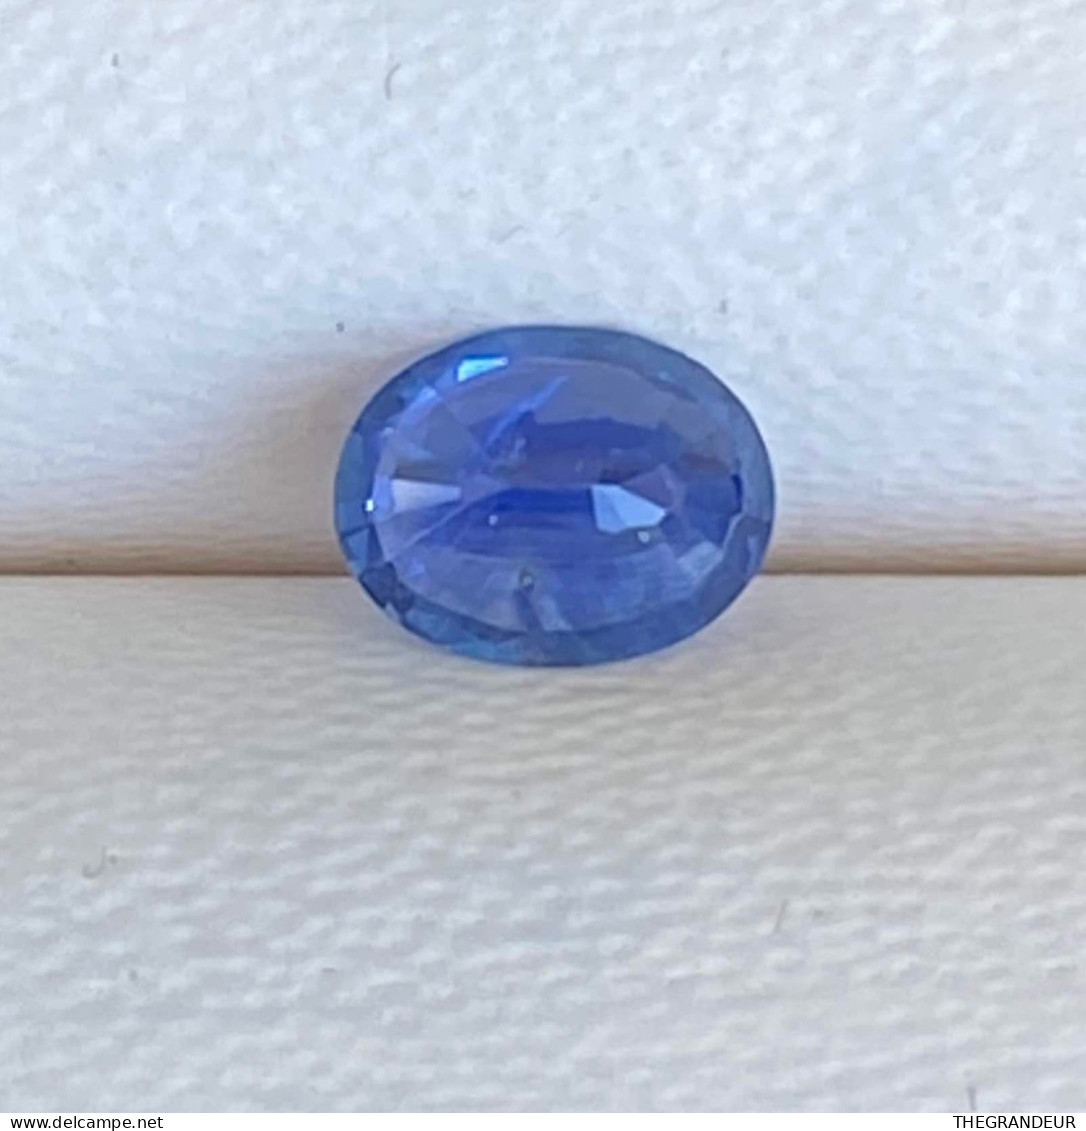 Natural Blue Sapphire Oval Cut 0.76 Carat From Sri Lanka - Saffier